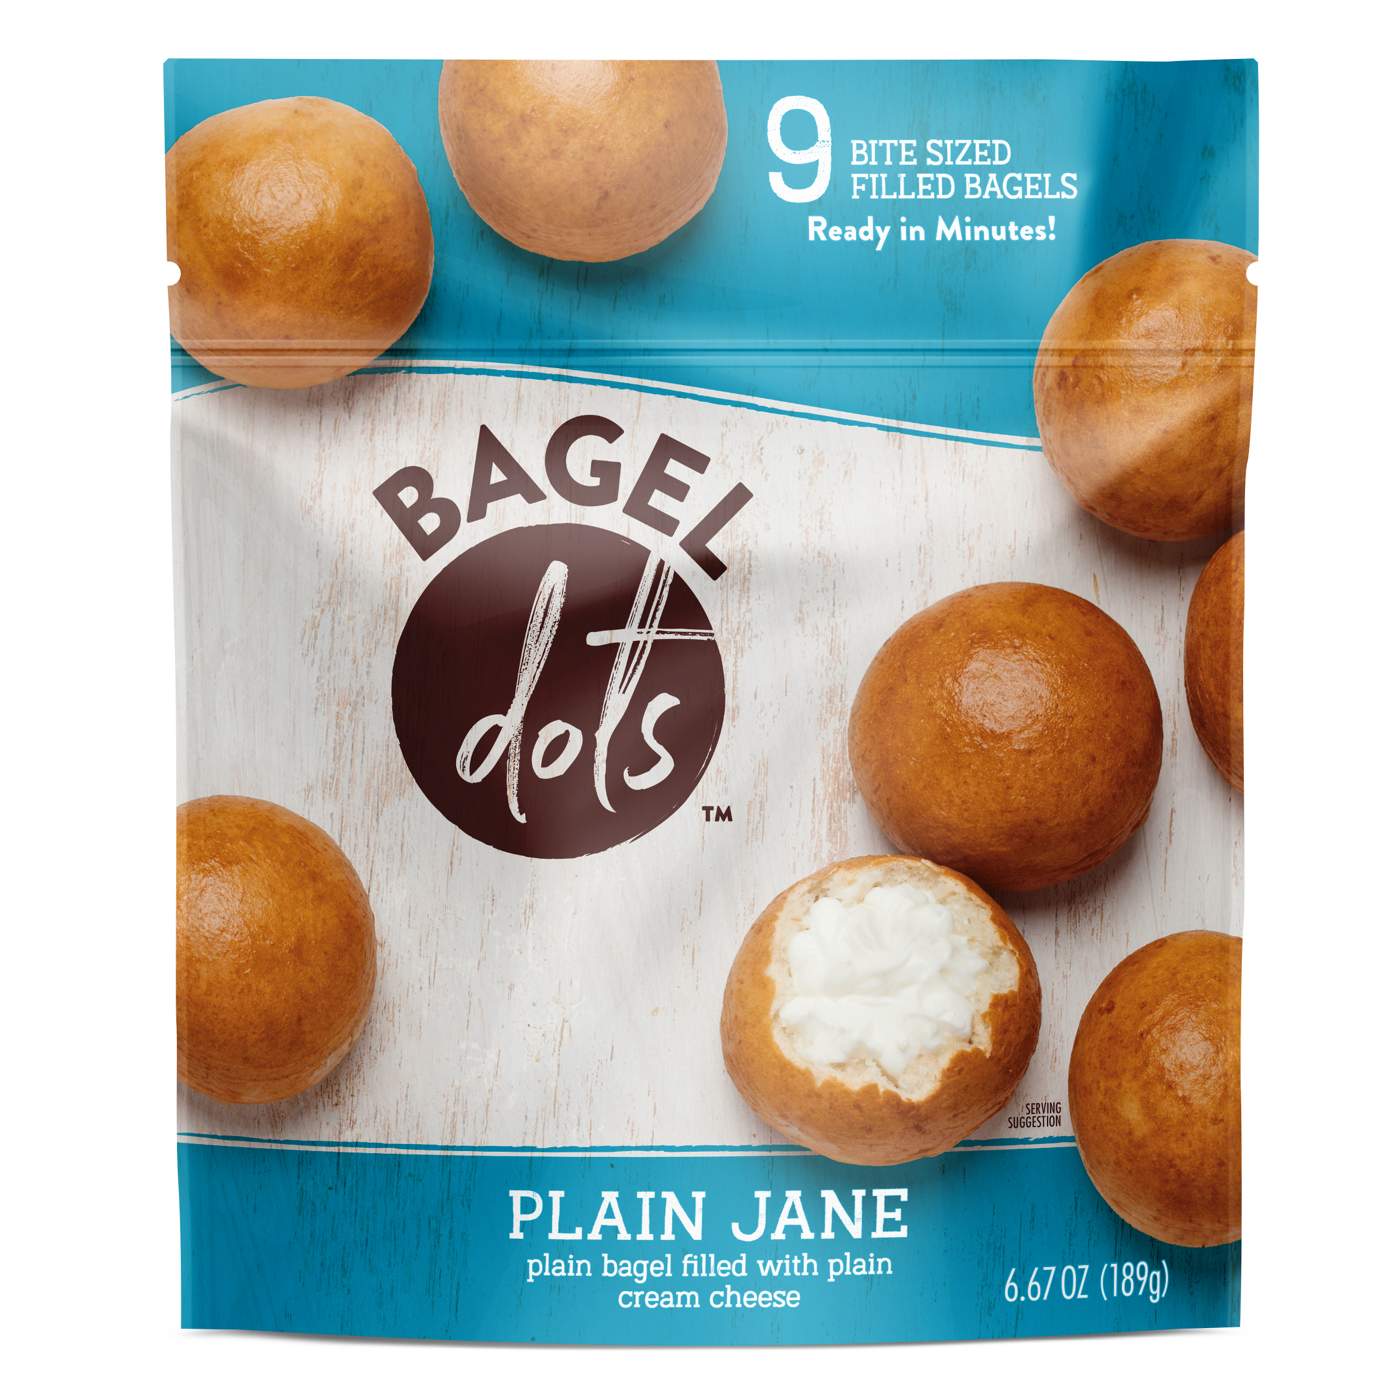 Bagel Dots Plain Jane; image 1 of 3